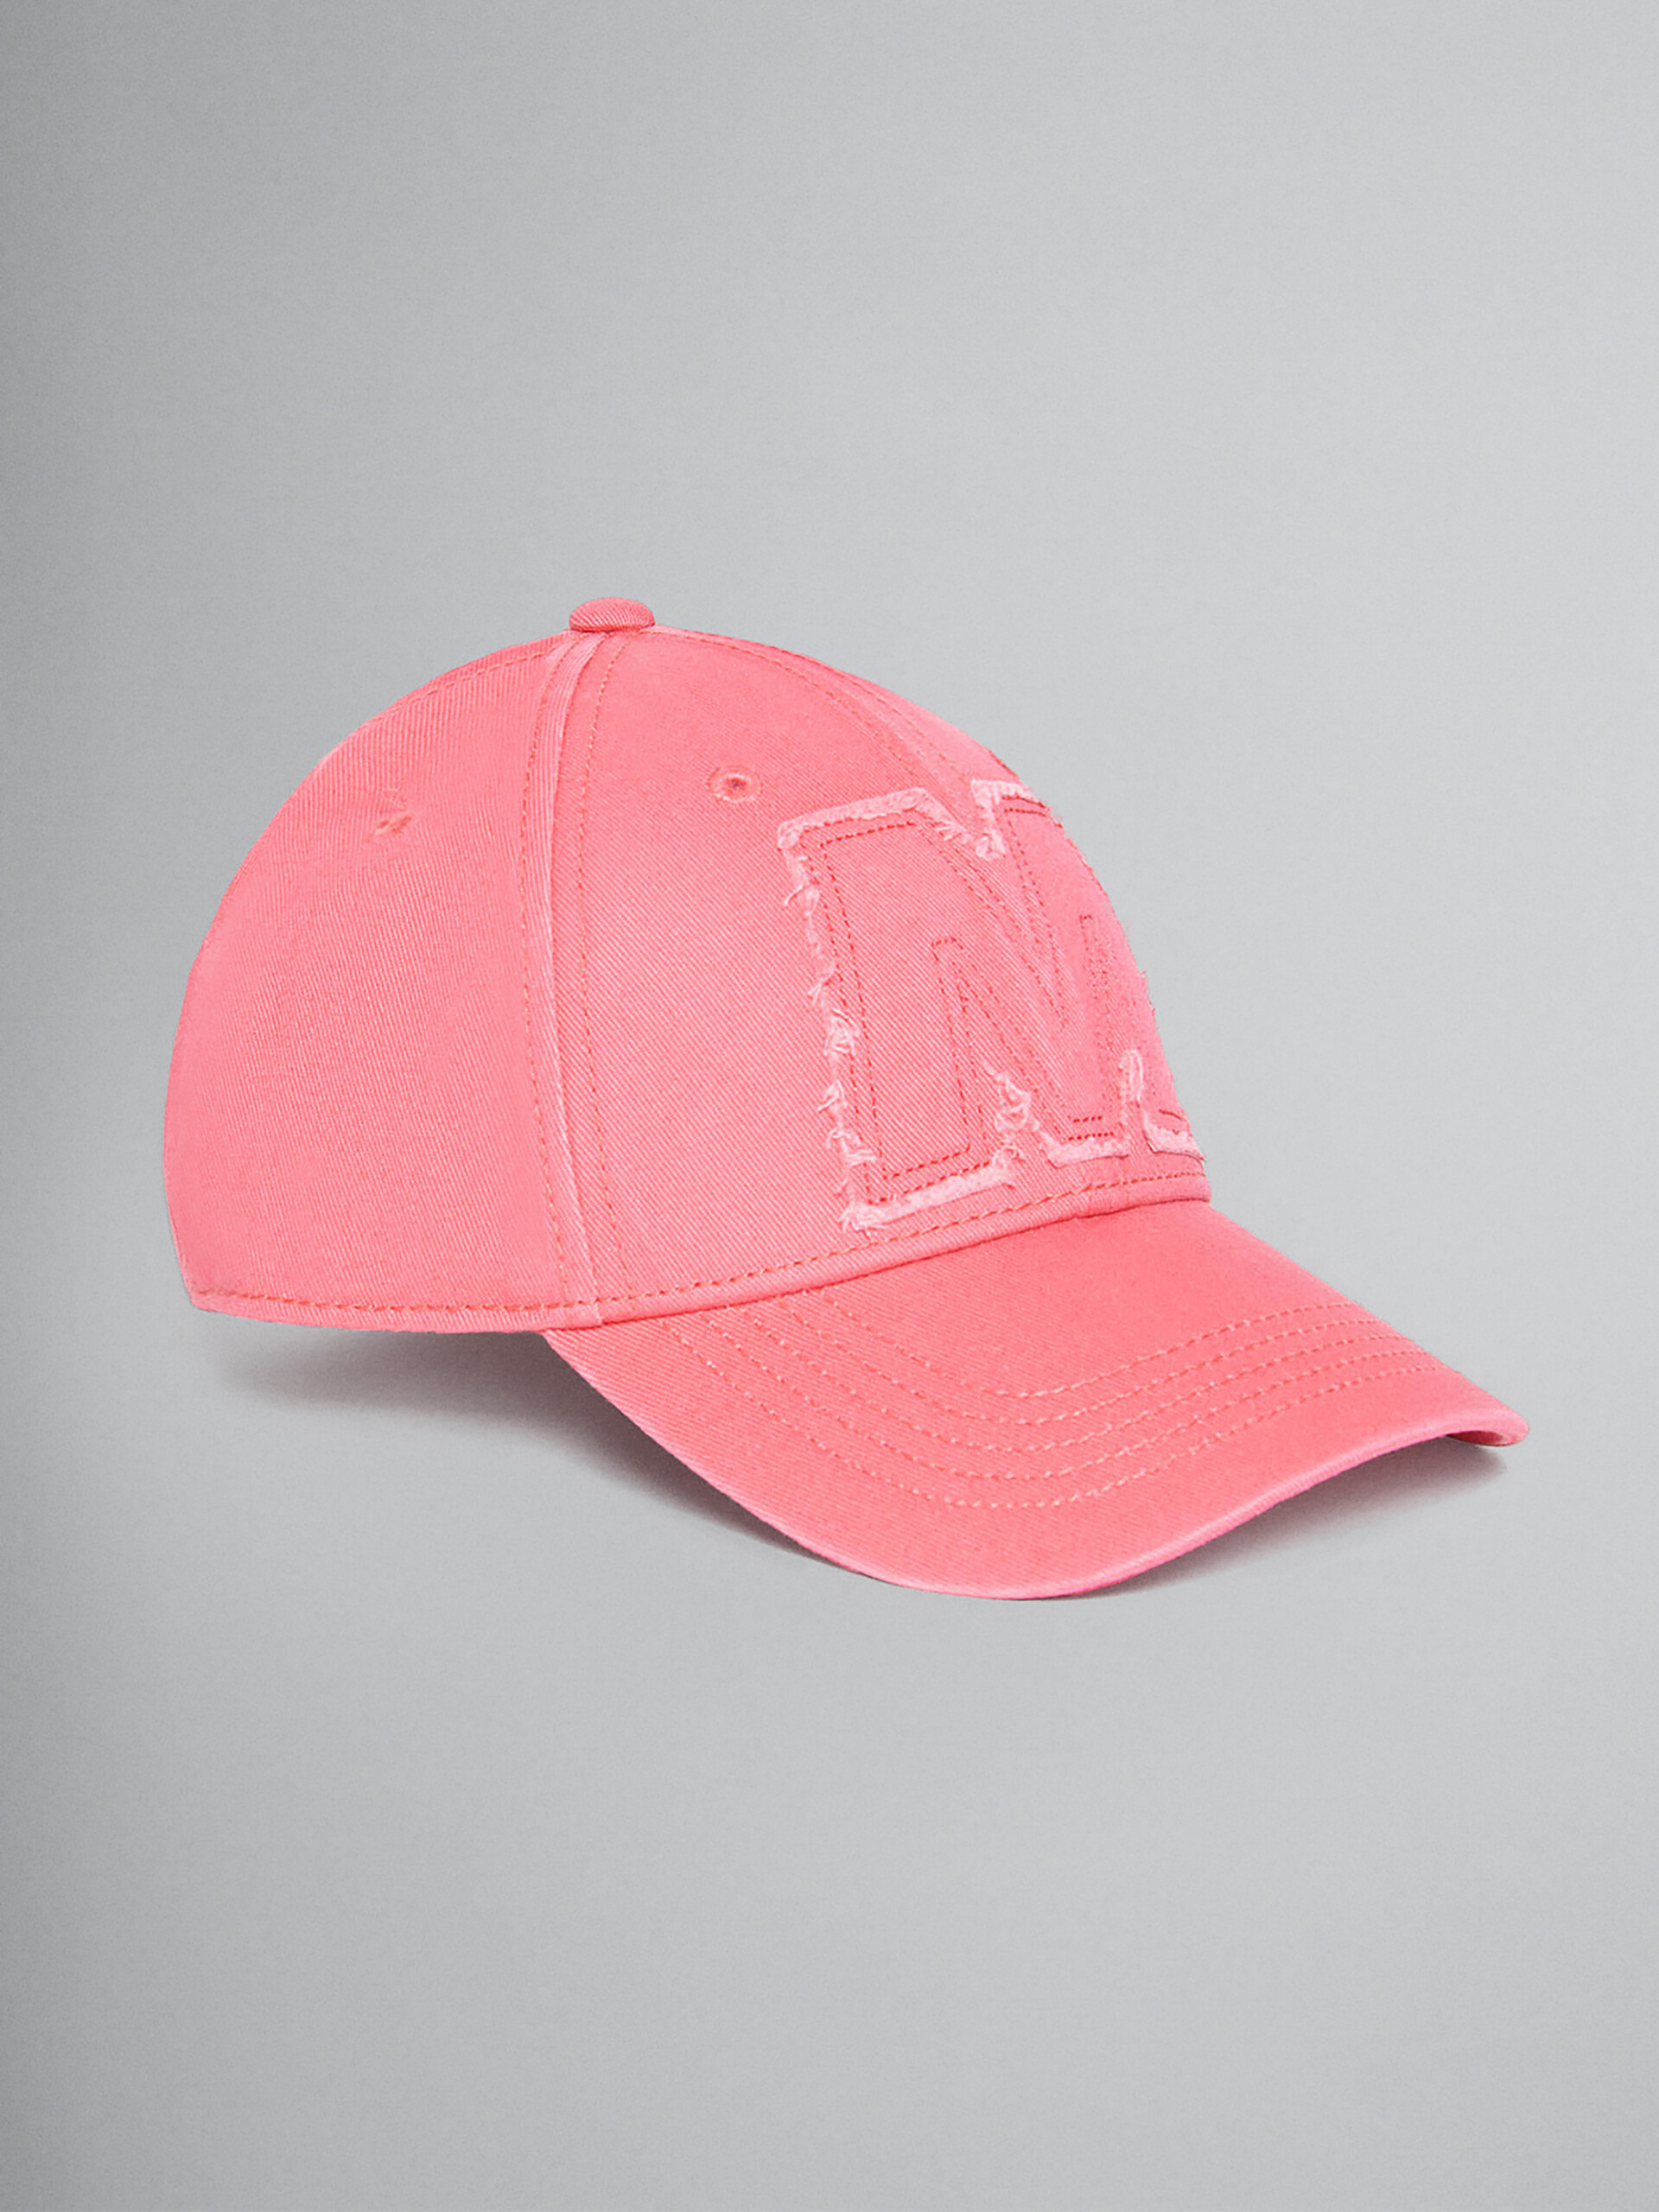 Fuchsia baseball cap with Big M logo - Caps - Image 1